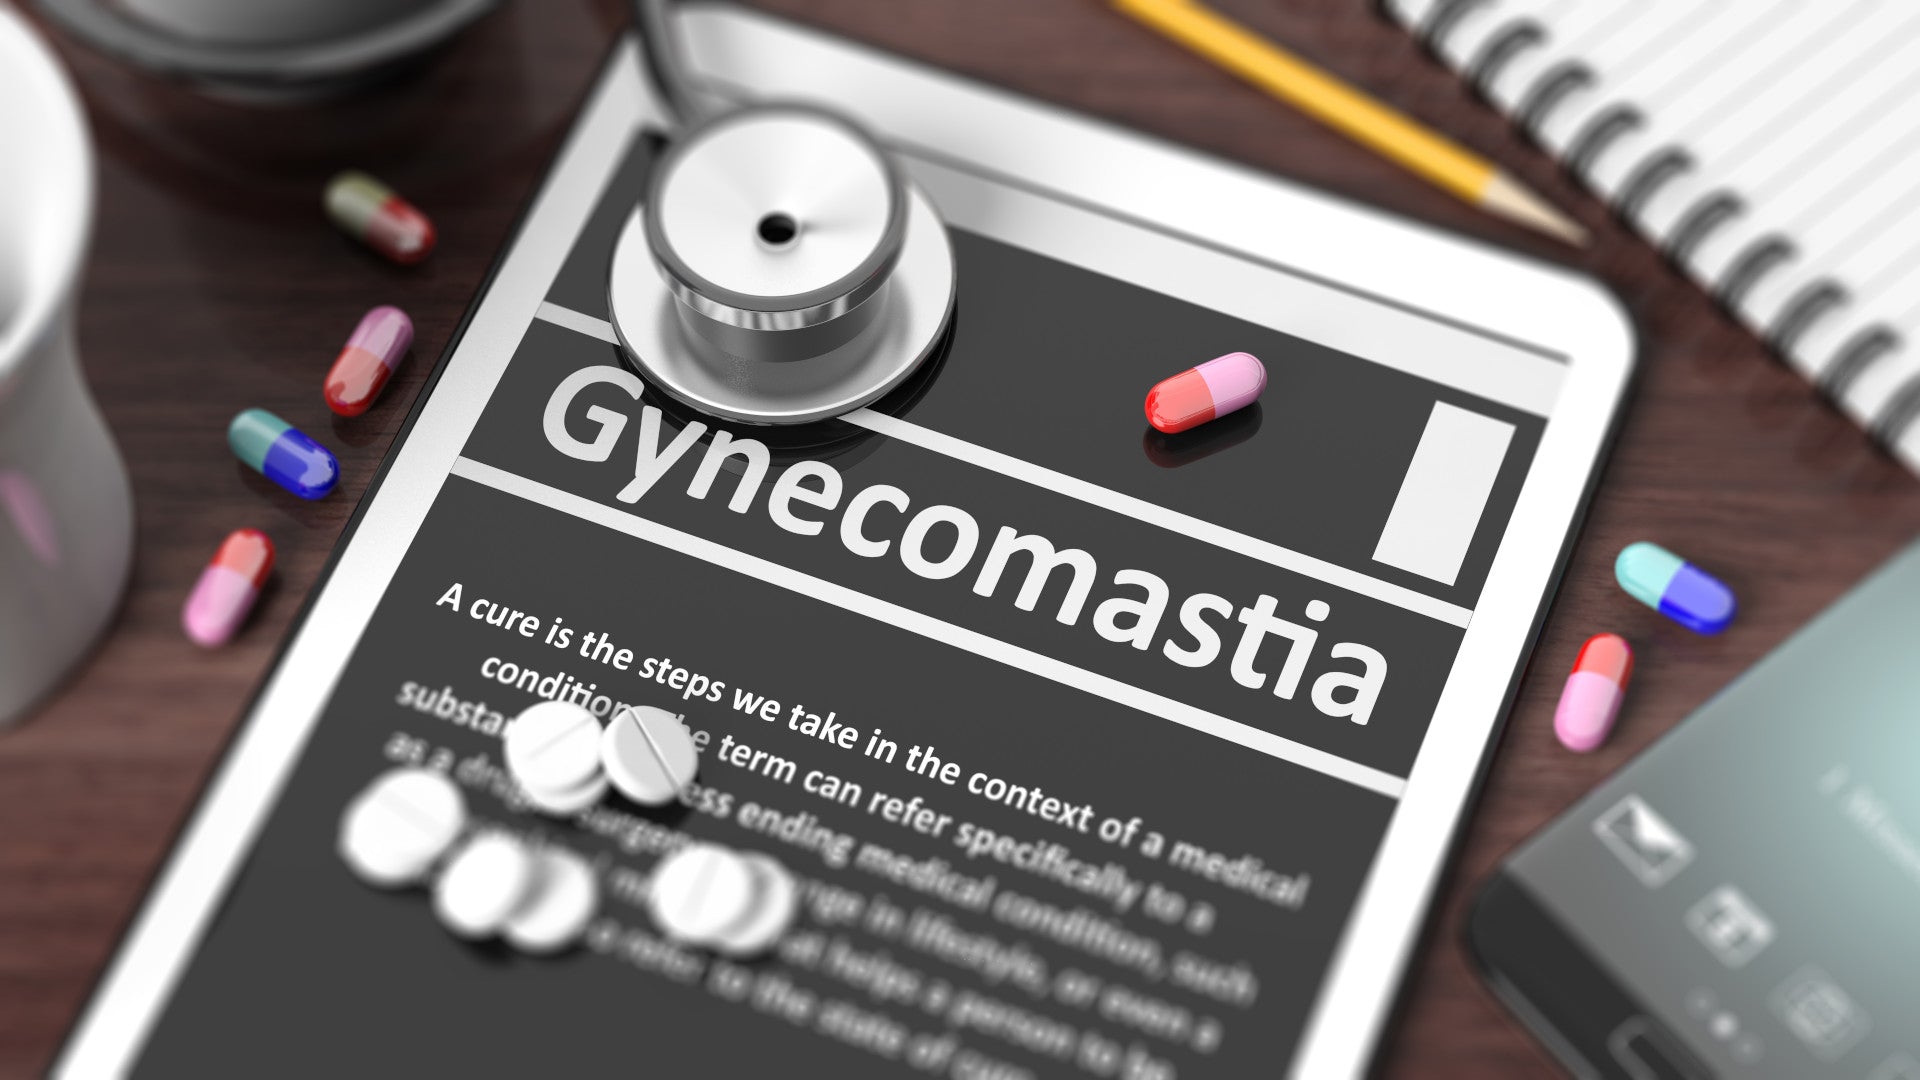 What Is Gynecomastia